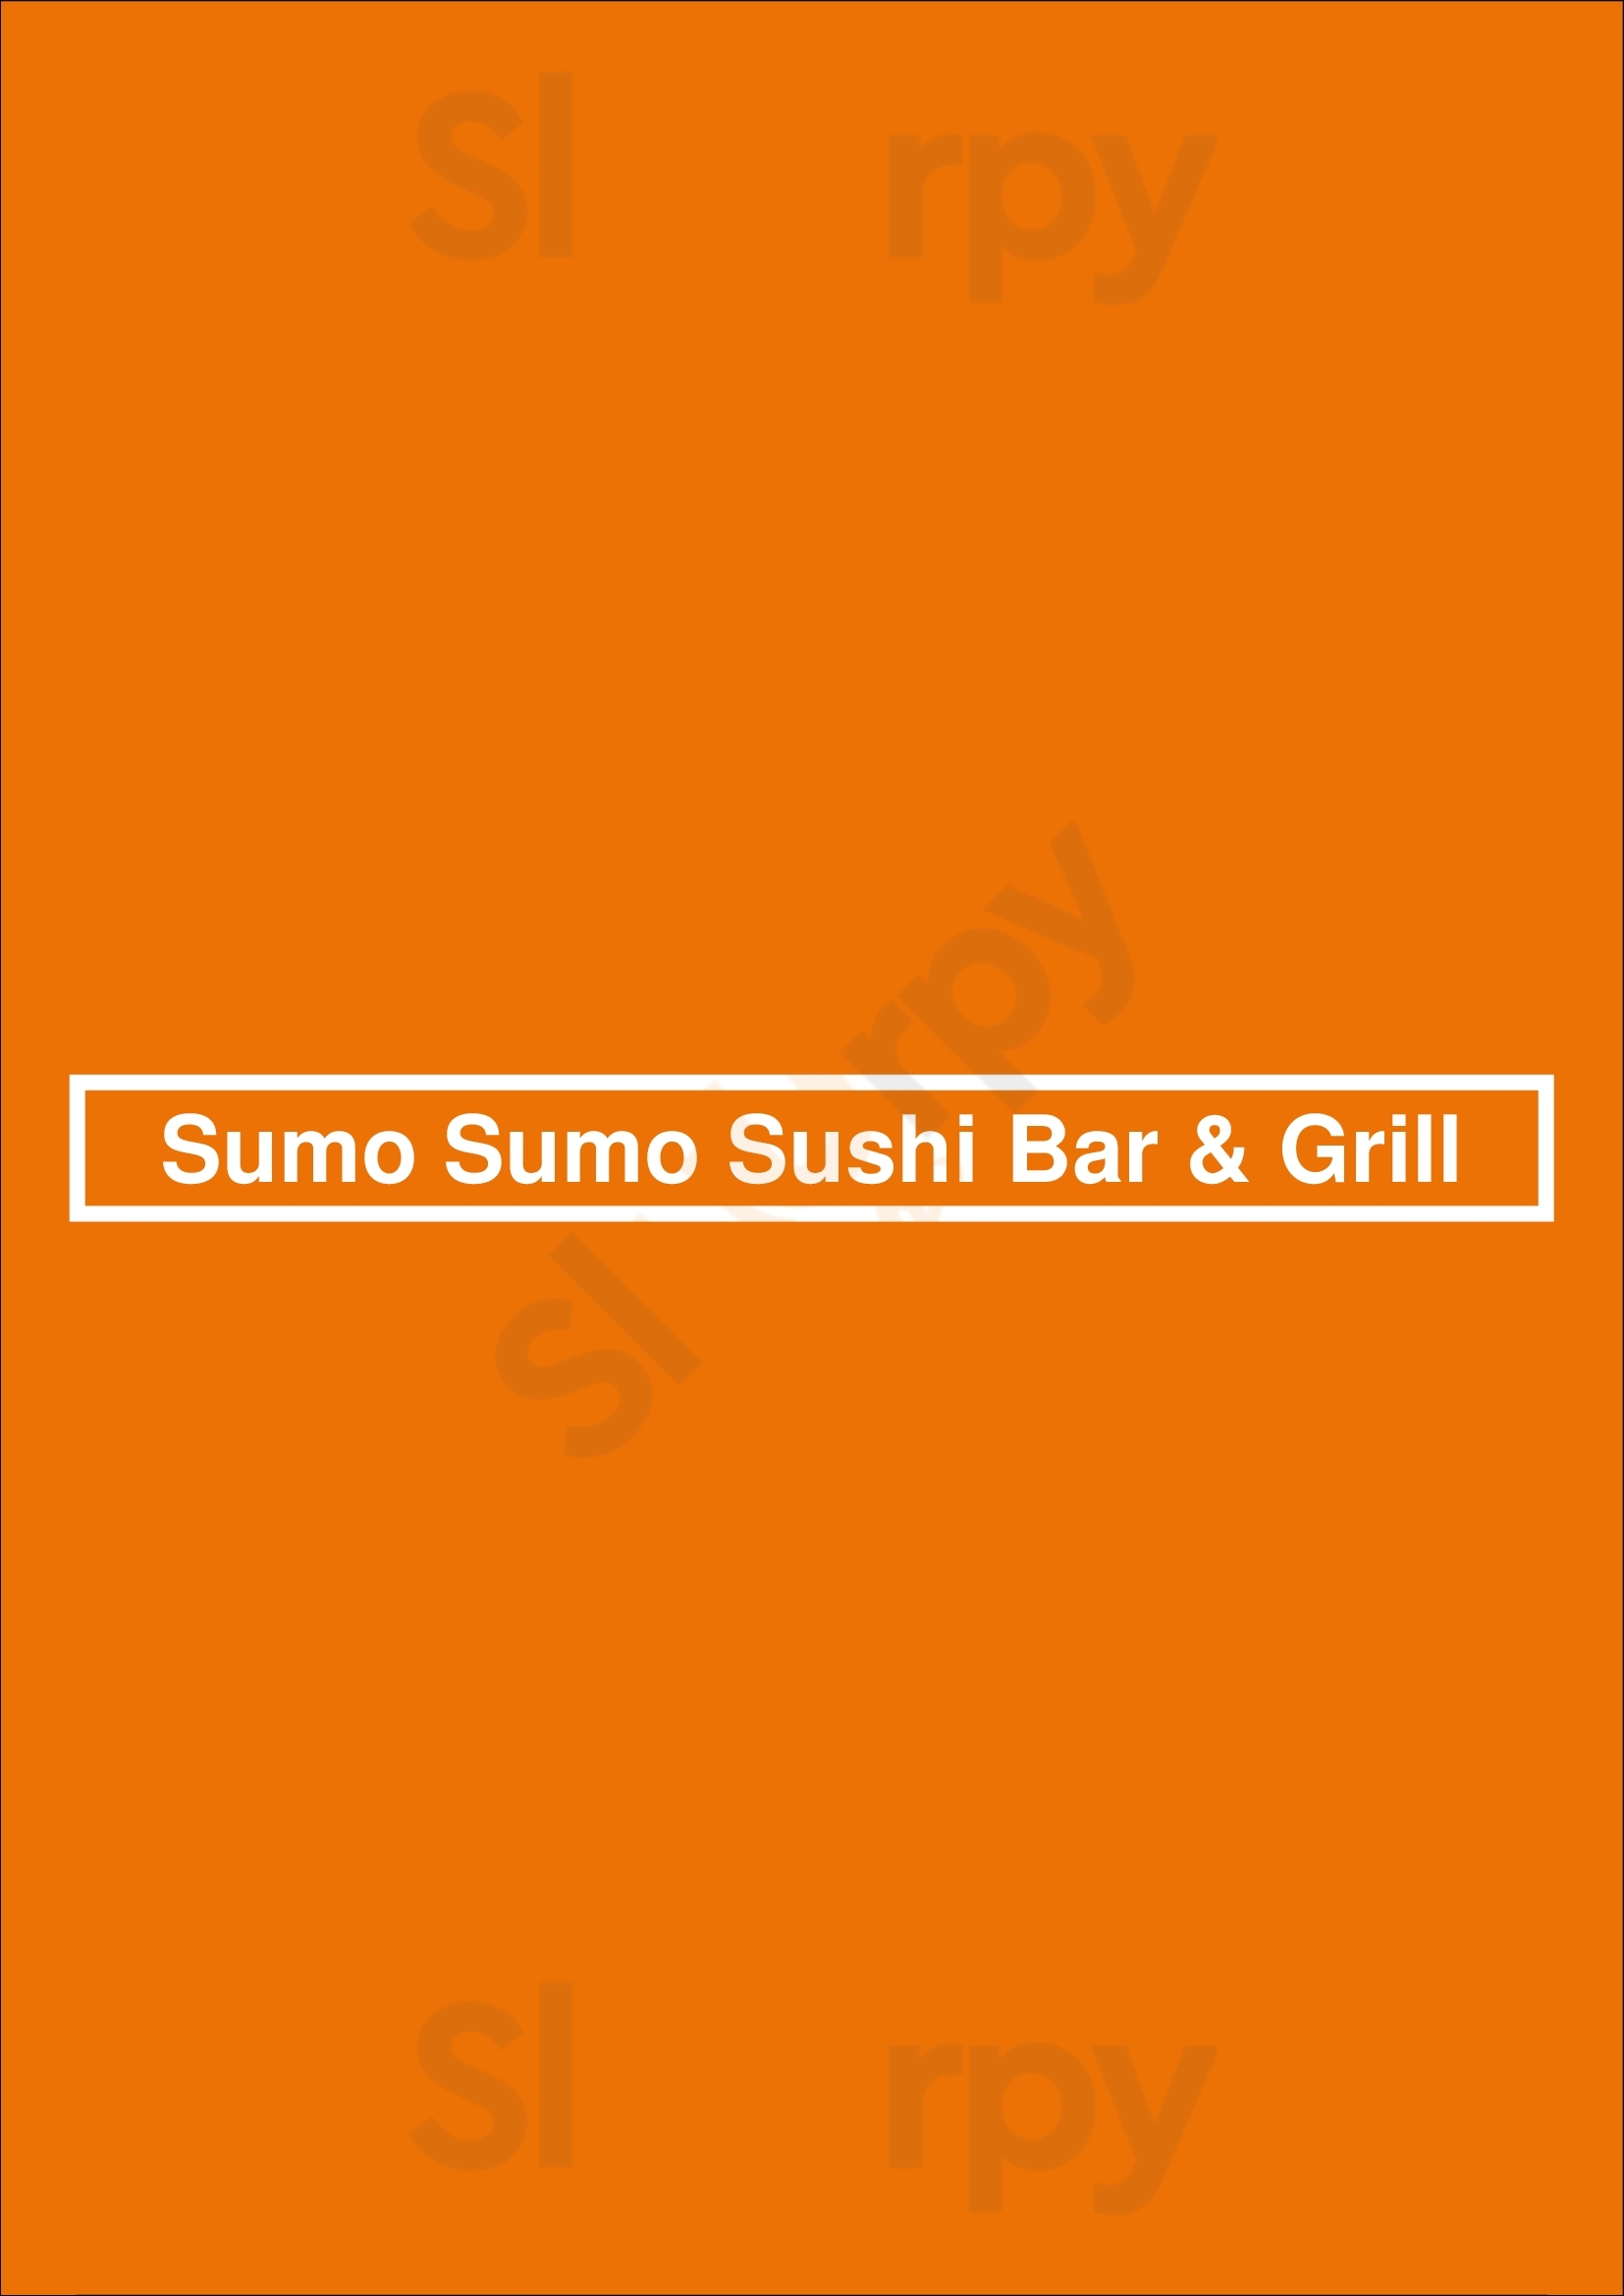 Sumo Sumo Sushi Bar & Grill Sherwood Park Menu - 1